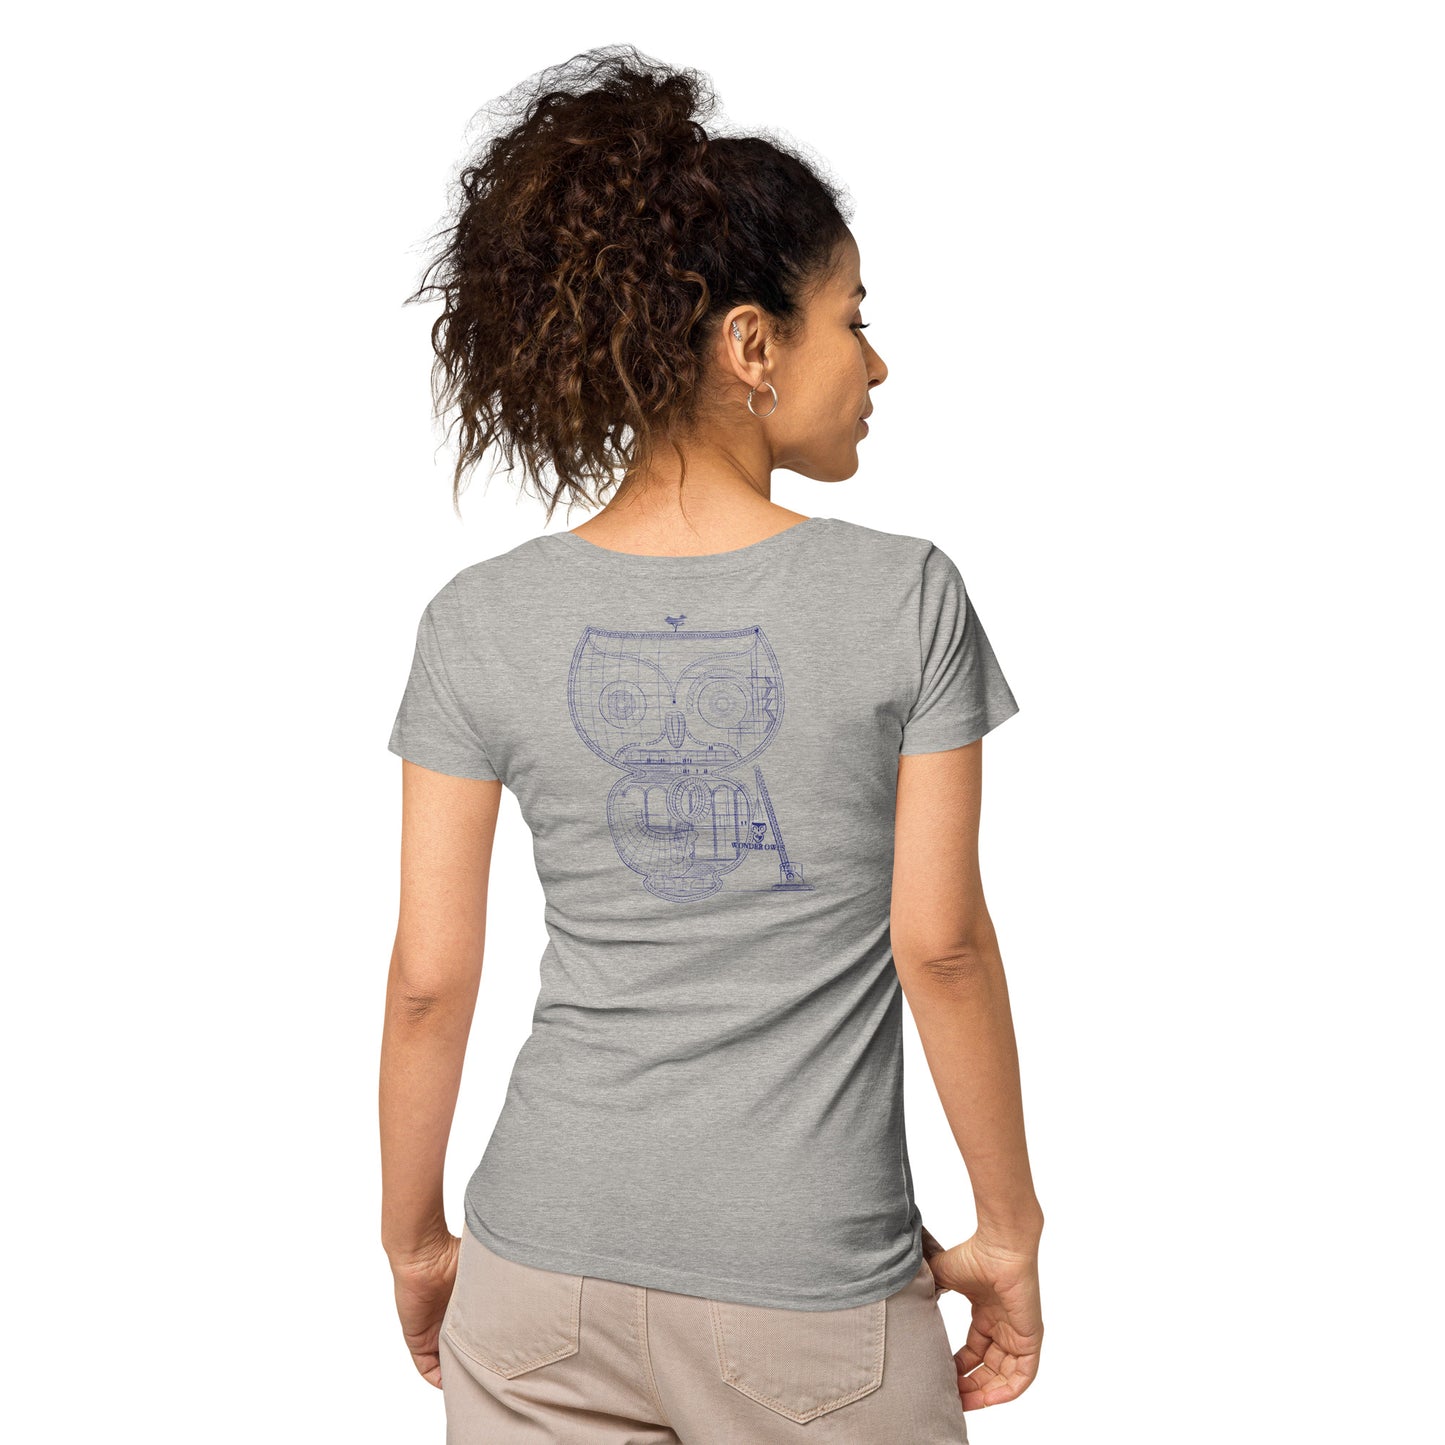 I Love You Owl Architecture  Women’s Basic Organic T-shirt